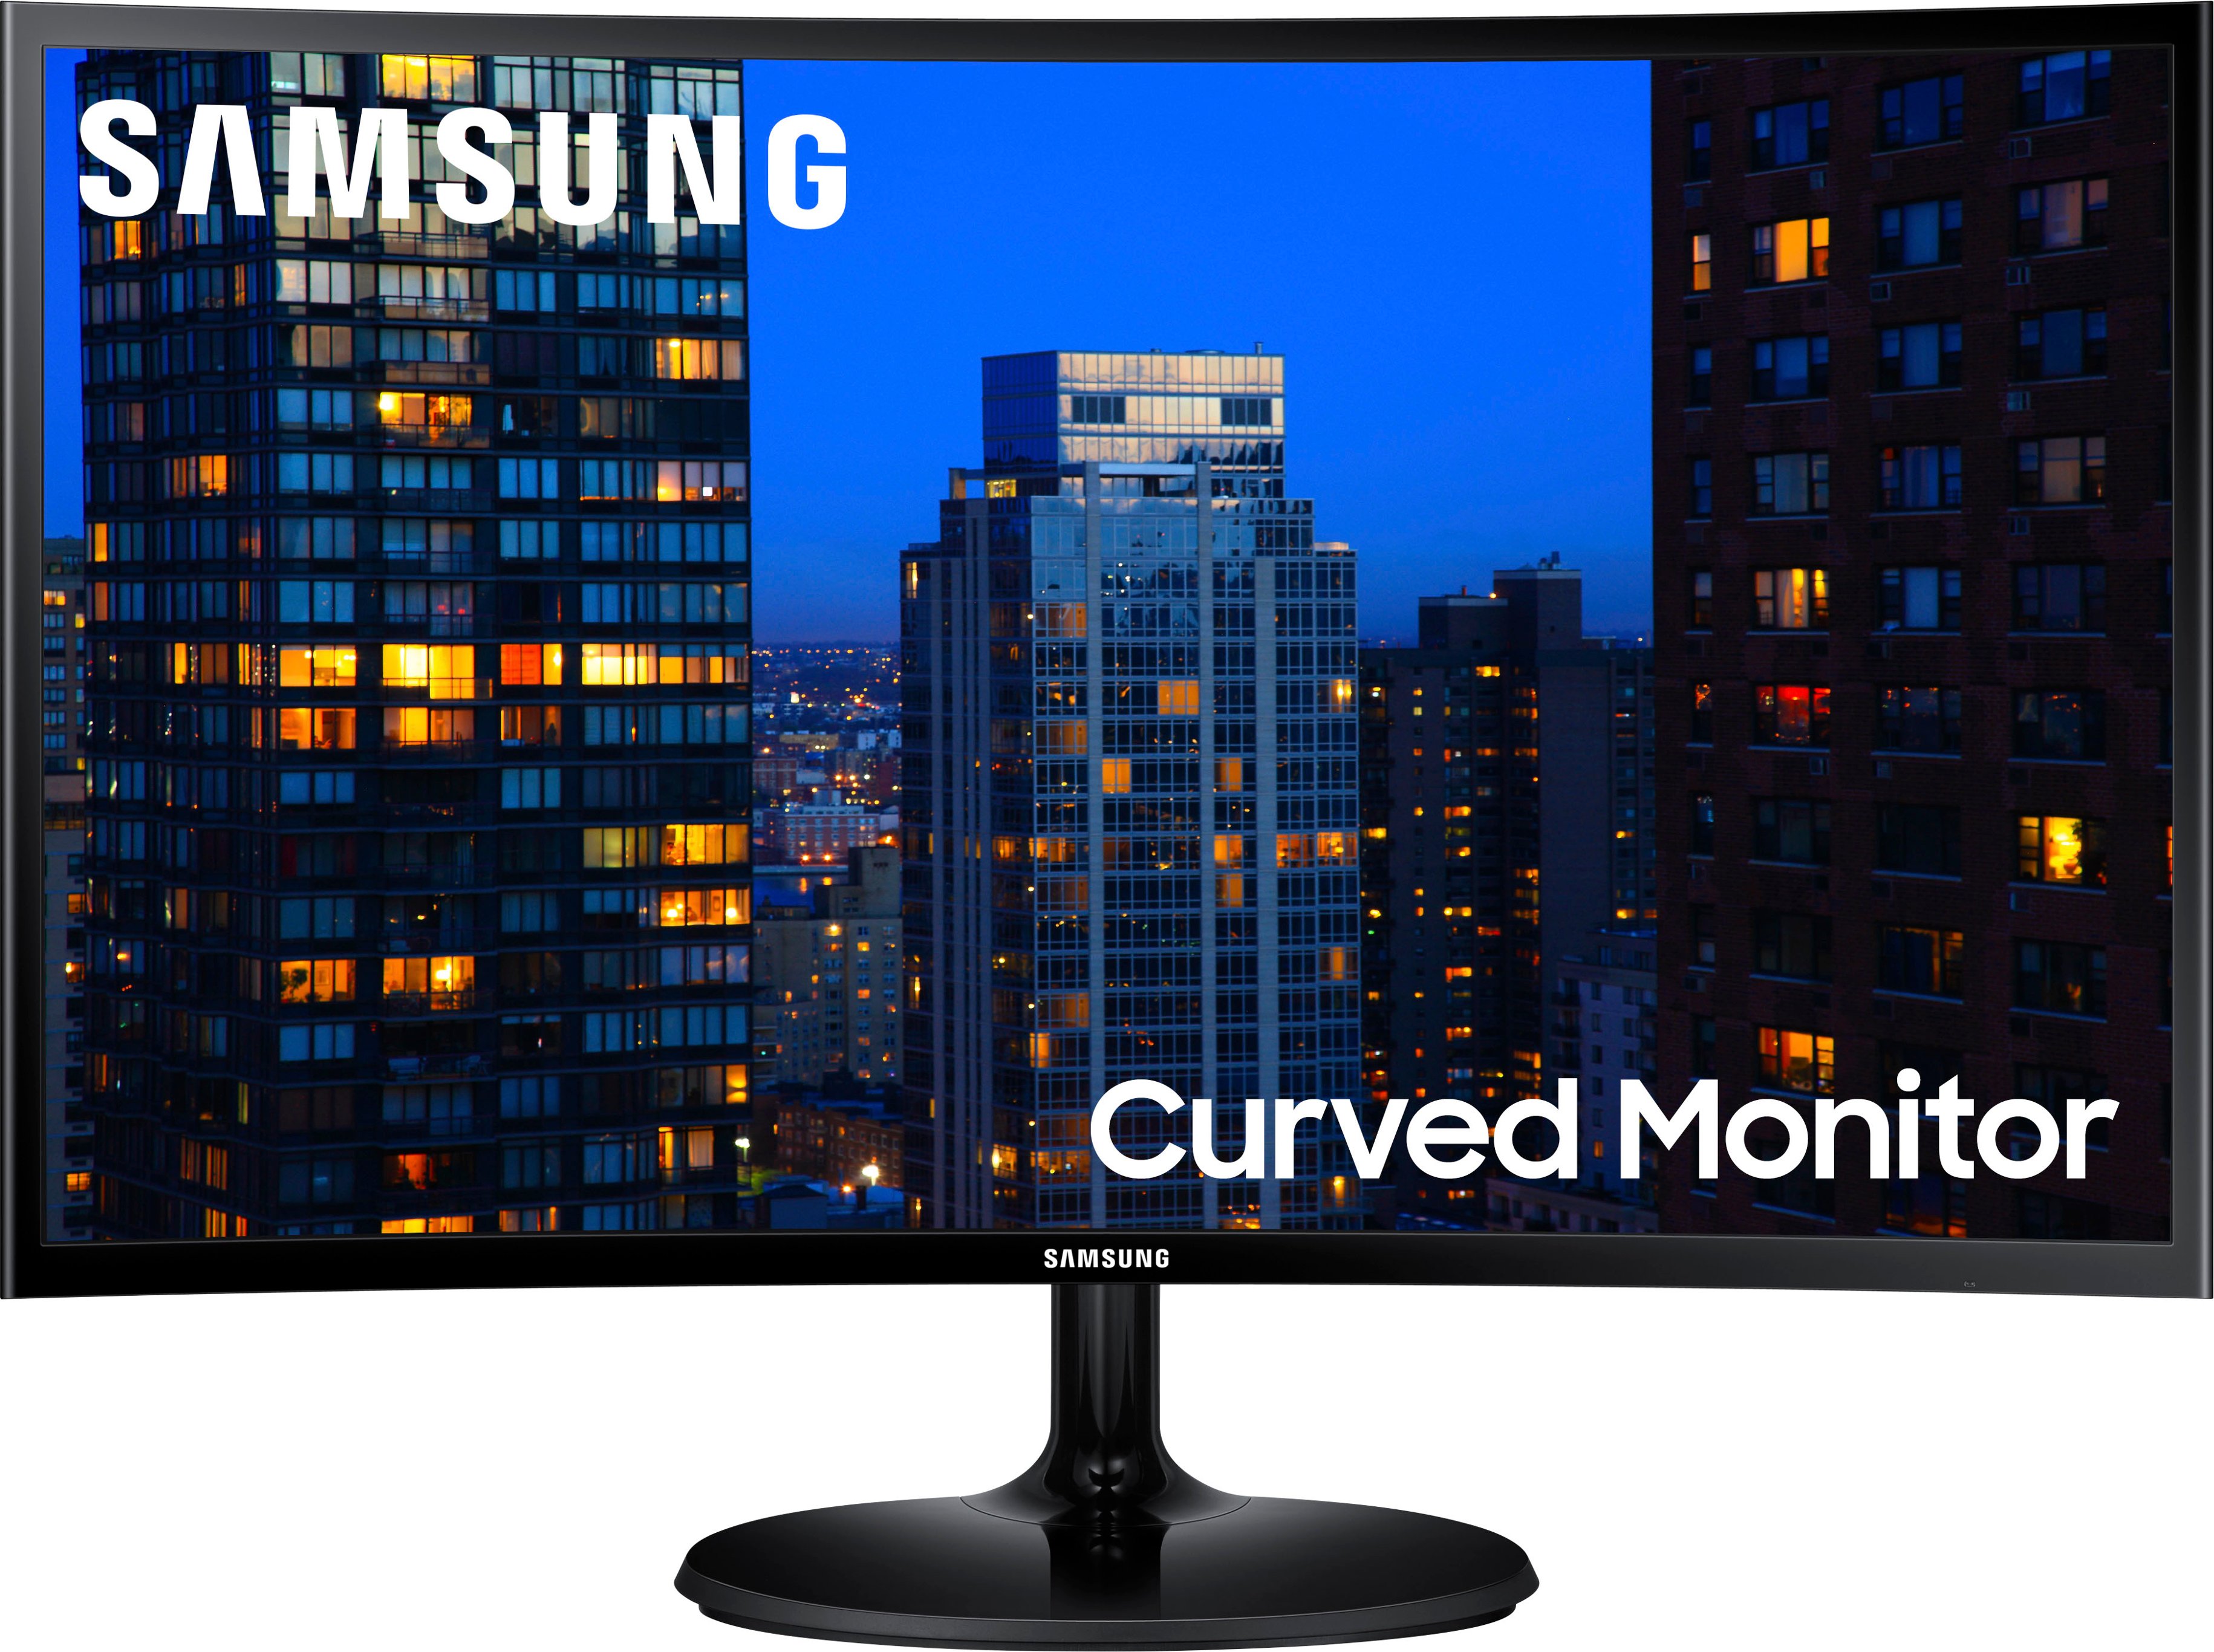 Samsung - 390 Series 24" LED Curved FHD FreeSync Monitor (DVI, HDMI, VGA) - High glossy black